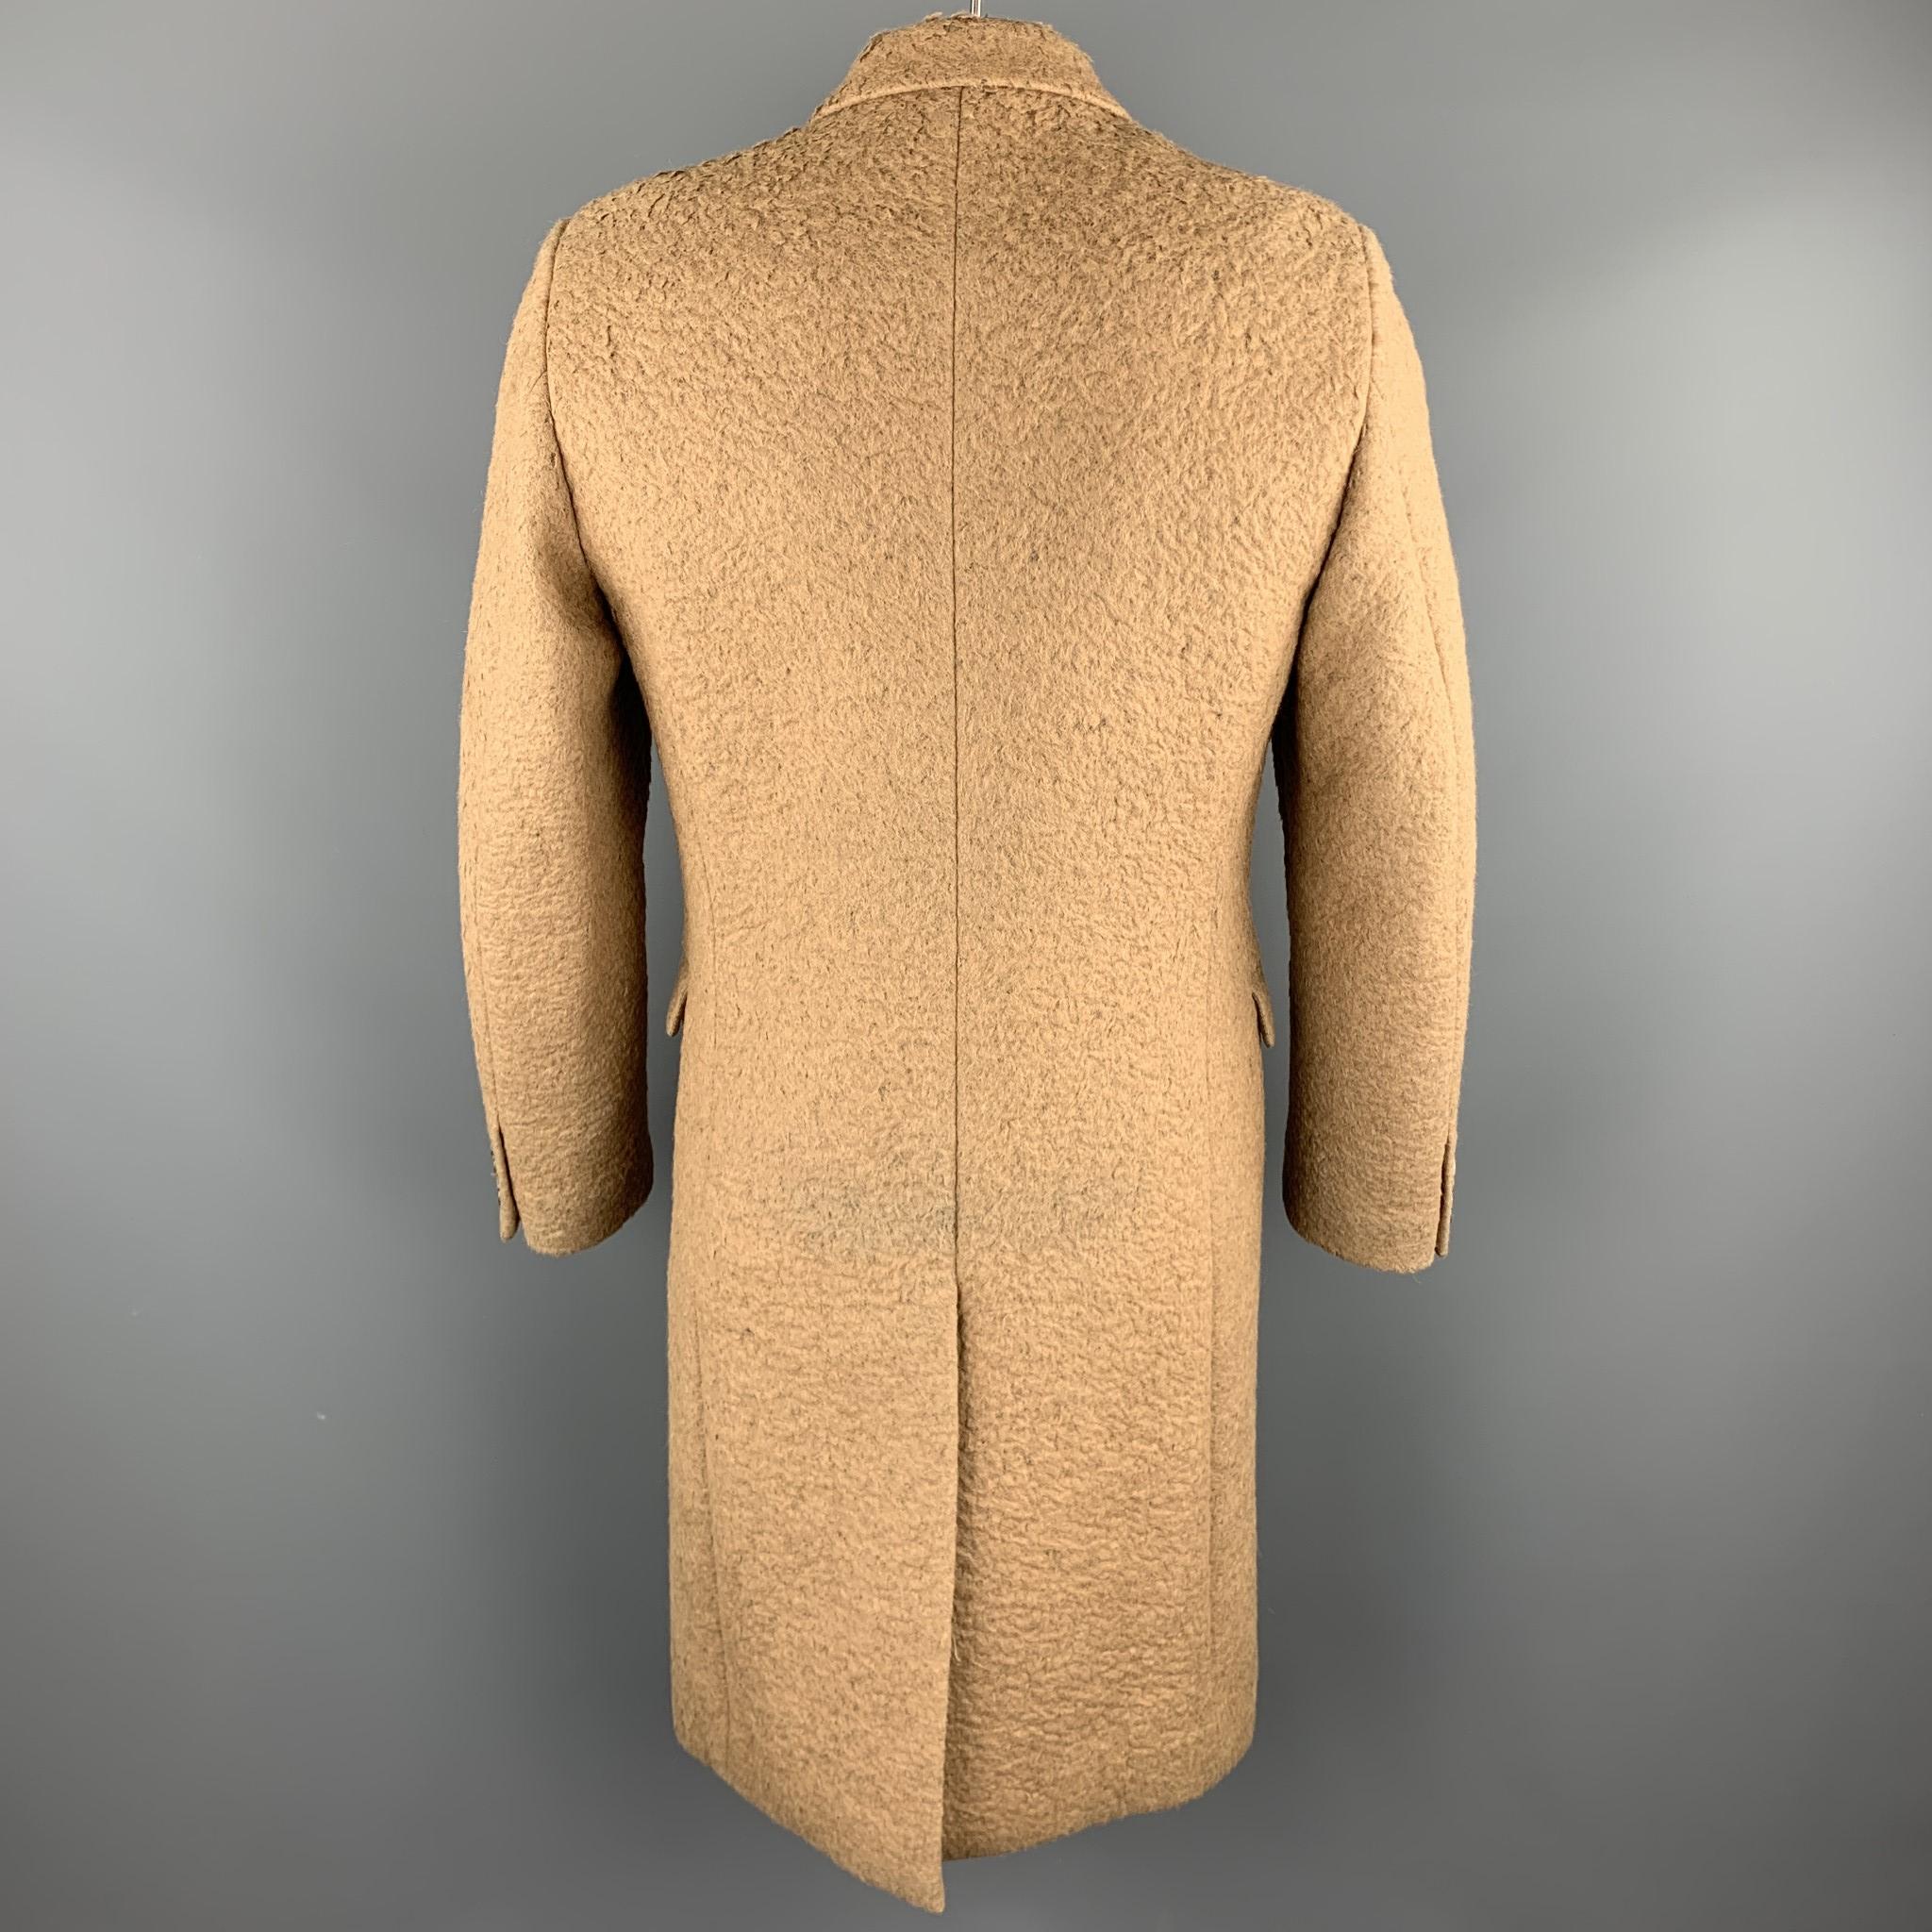 Beige CALVIN KLEIN COLLECTION Size 38 Tan Textured Wool Blend Coat